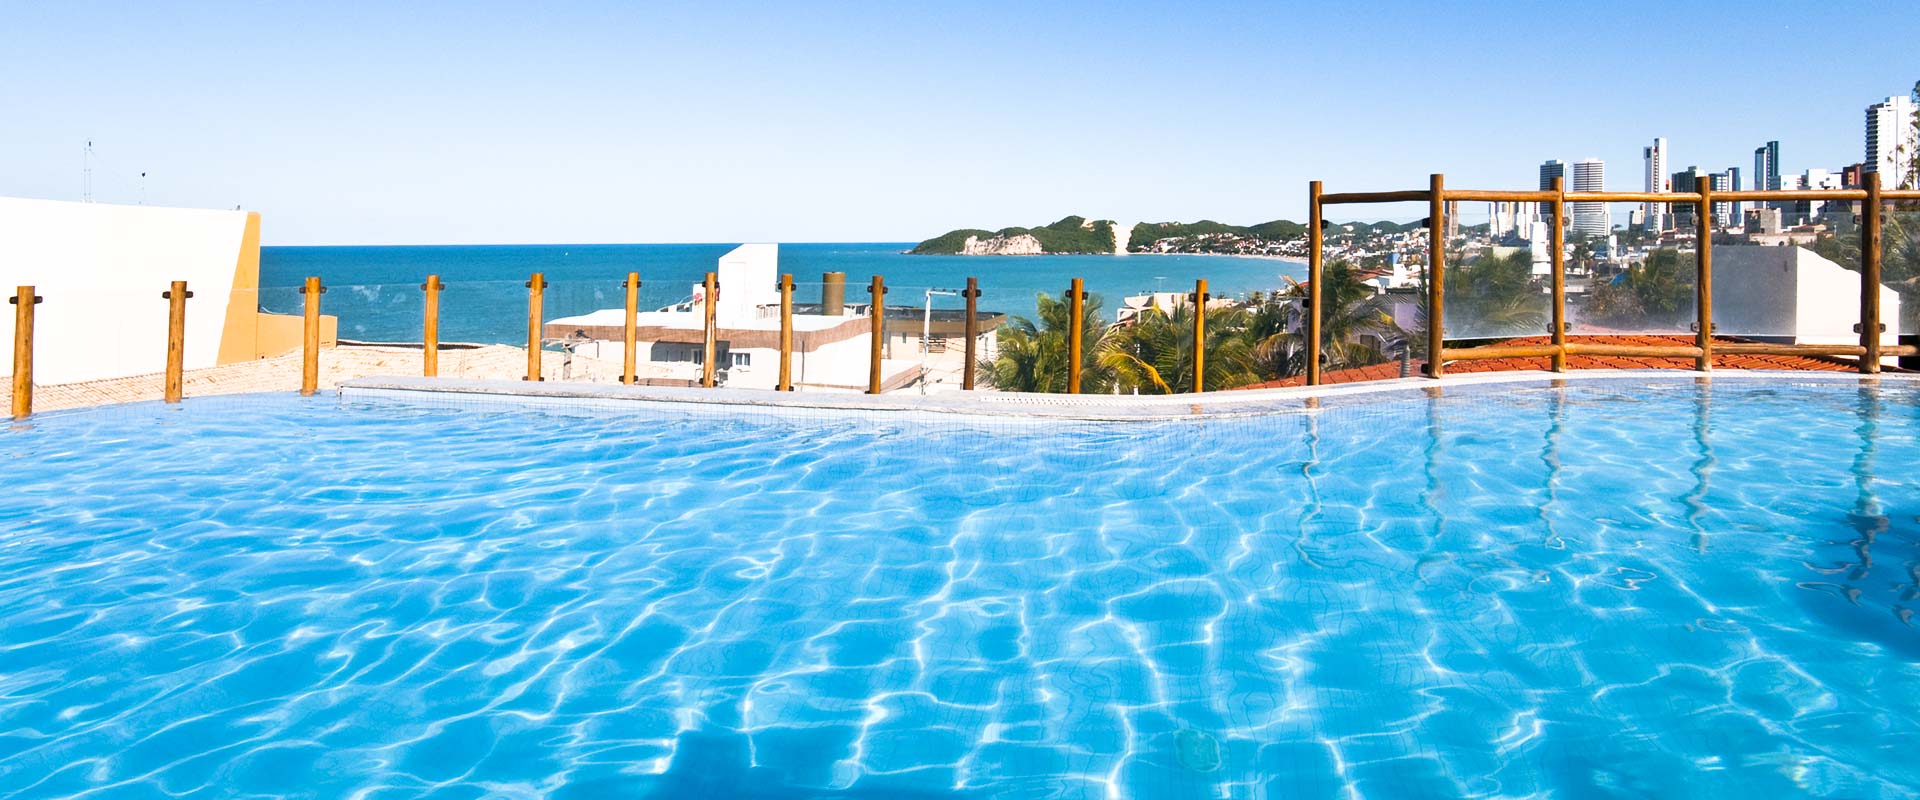 slider-home-pontalmar-praia-hotel-piscina